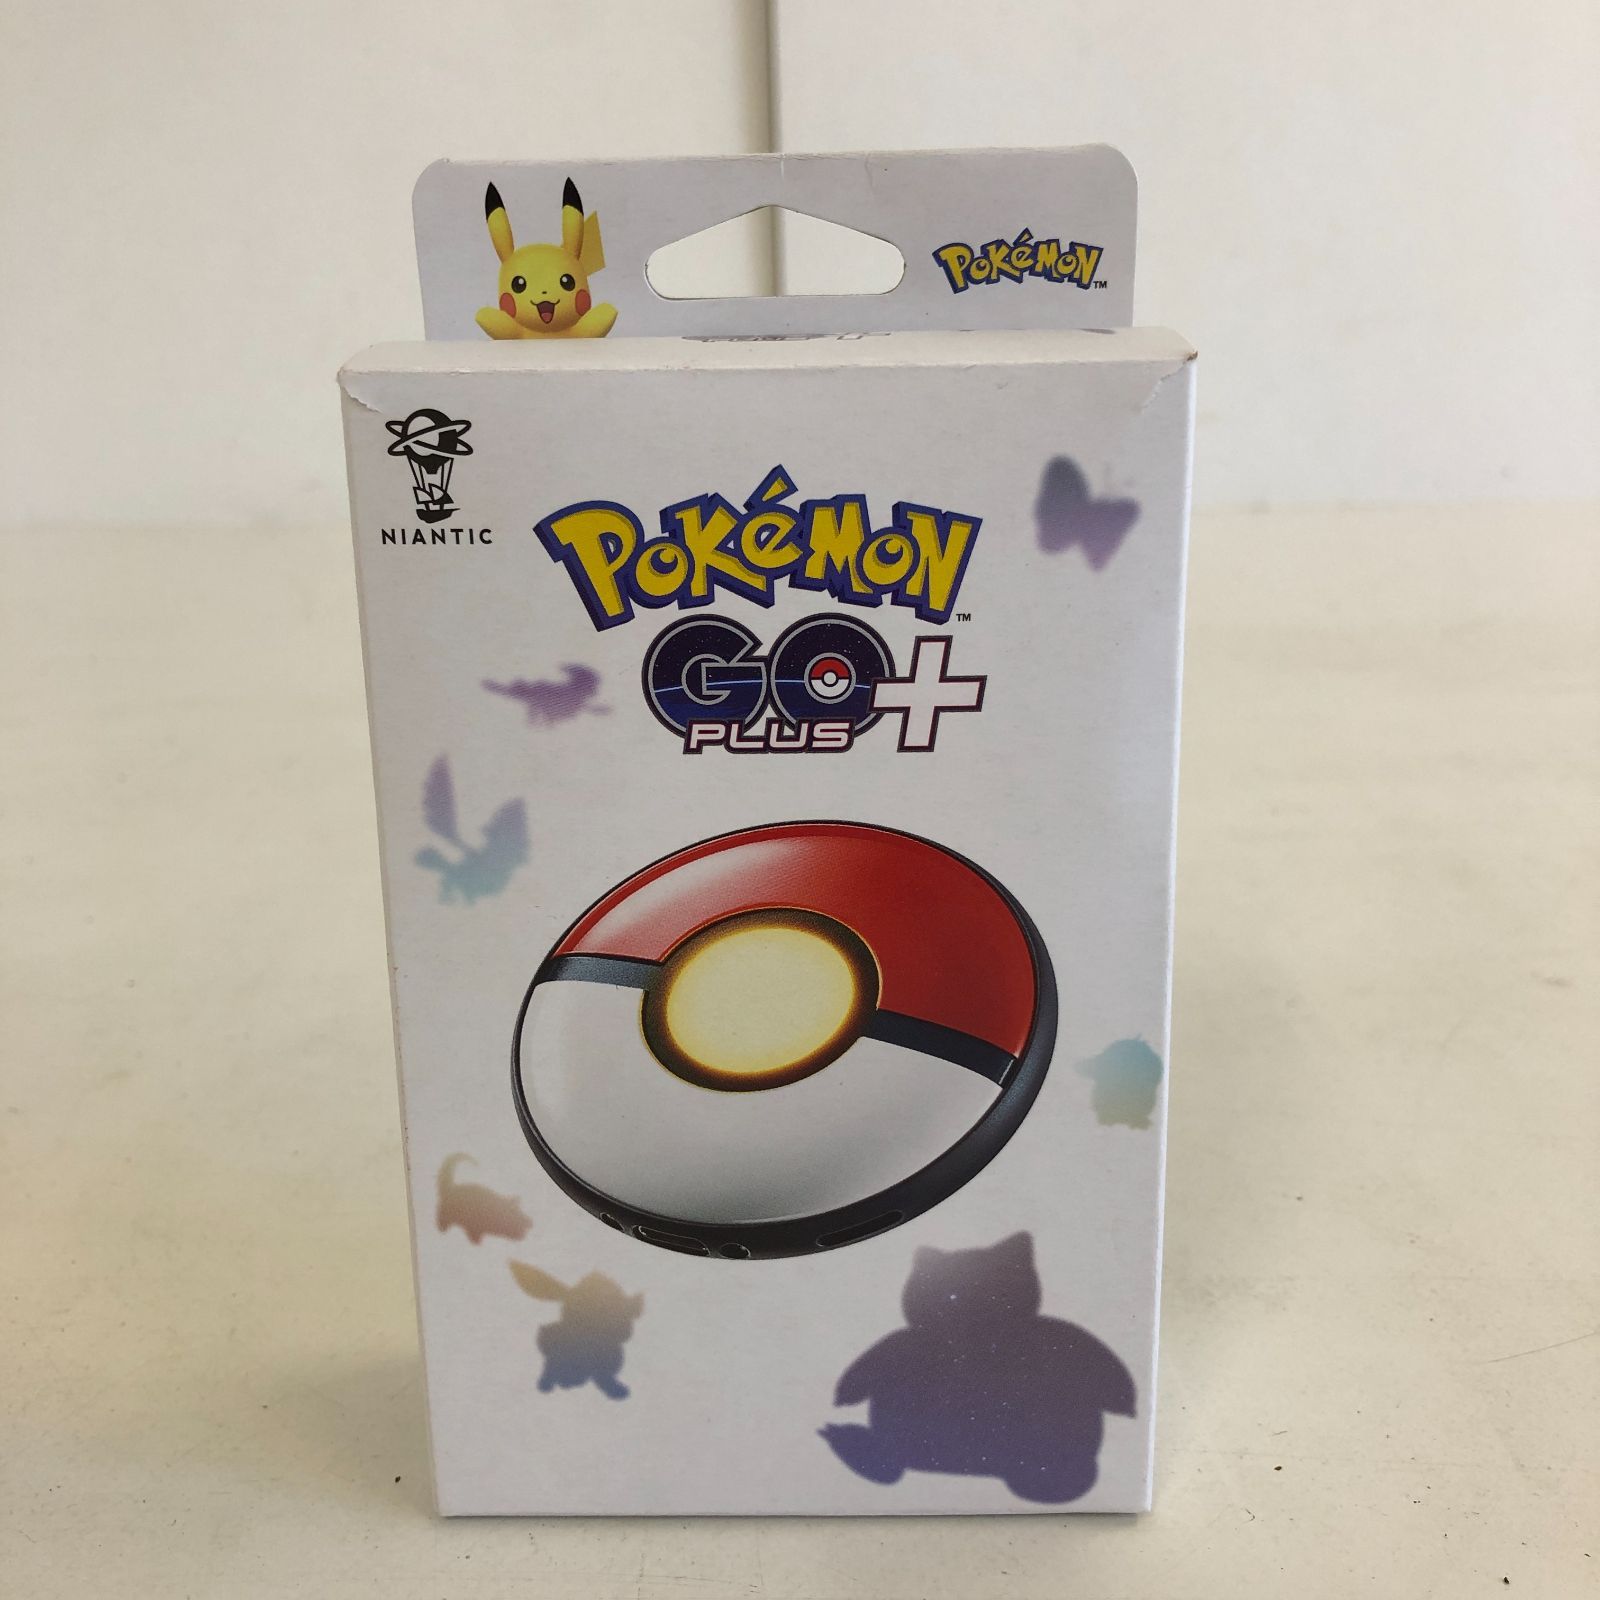 02m0703 Pokémon GO Plus + ポケモン ゴープラスプラス 中古品 - メルカリ